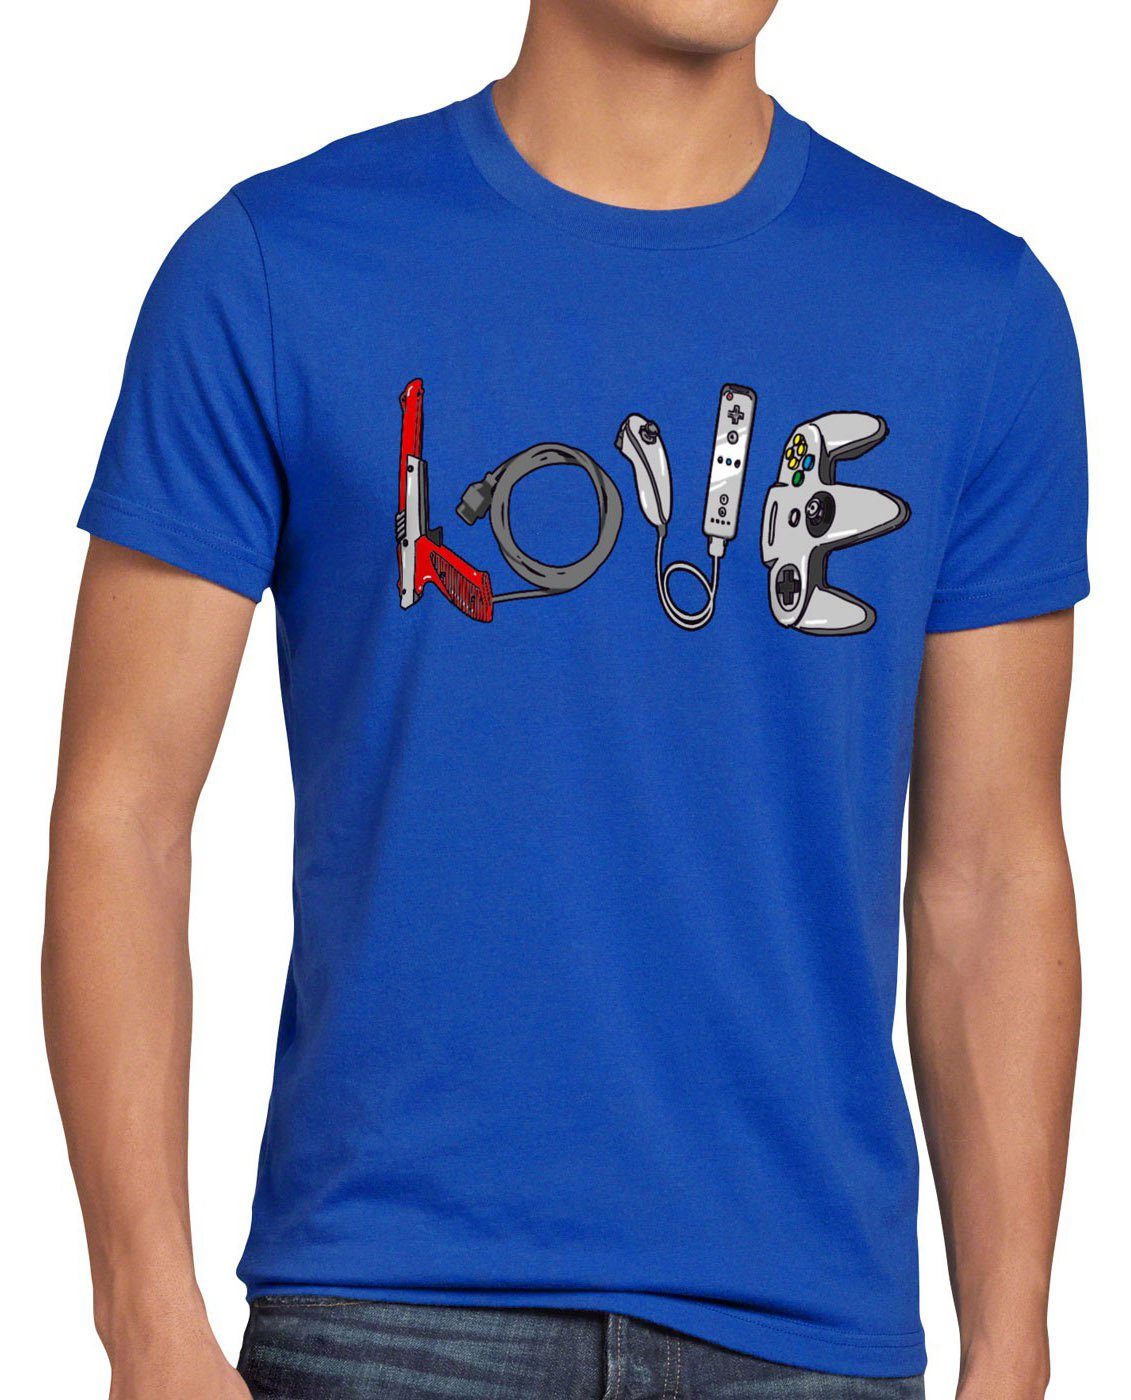 Print-Shirt n64 mario snes blau kart Herren konsole switch nintendo zelda style3 Gamer T-Shirt LOVE nes